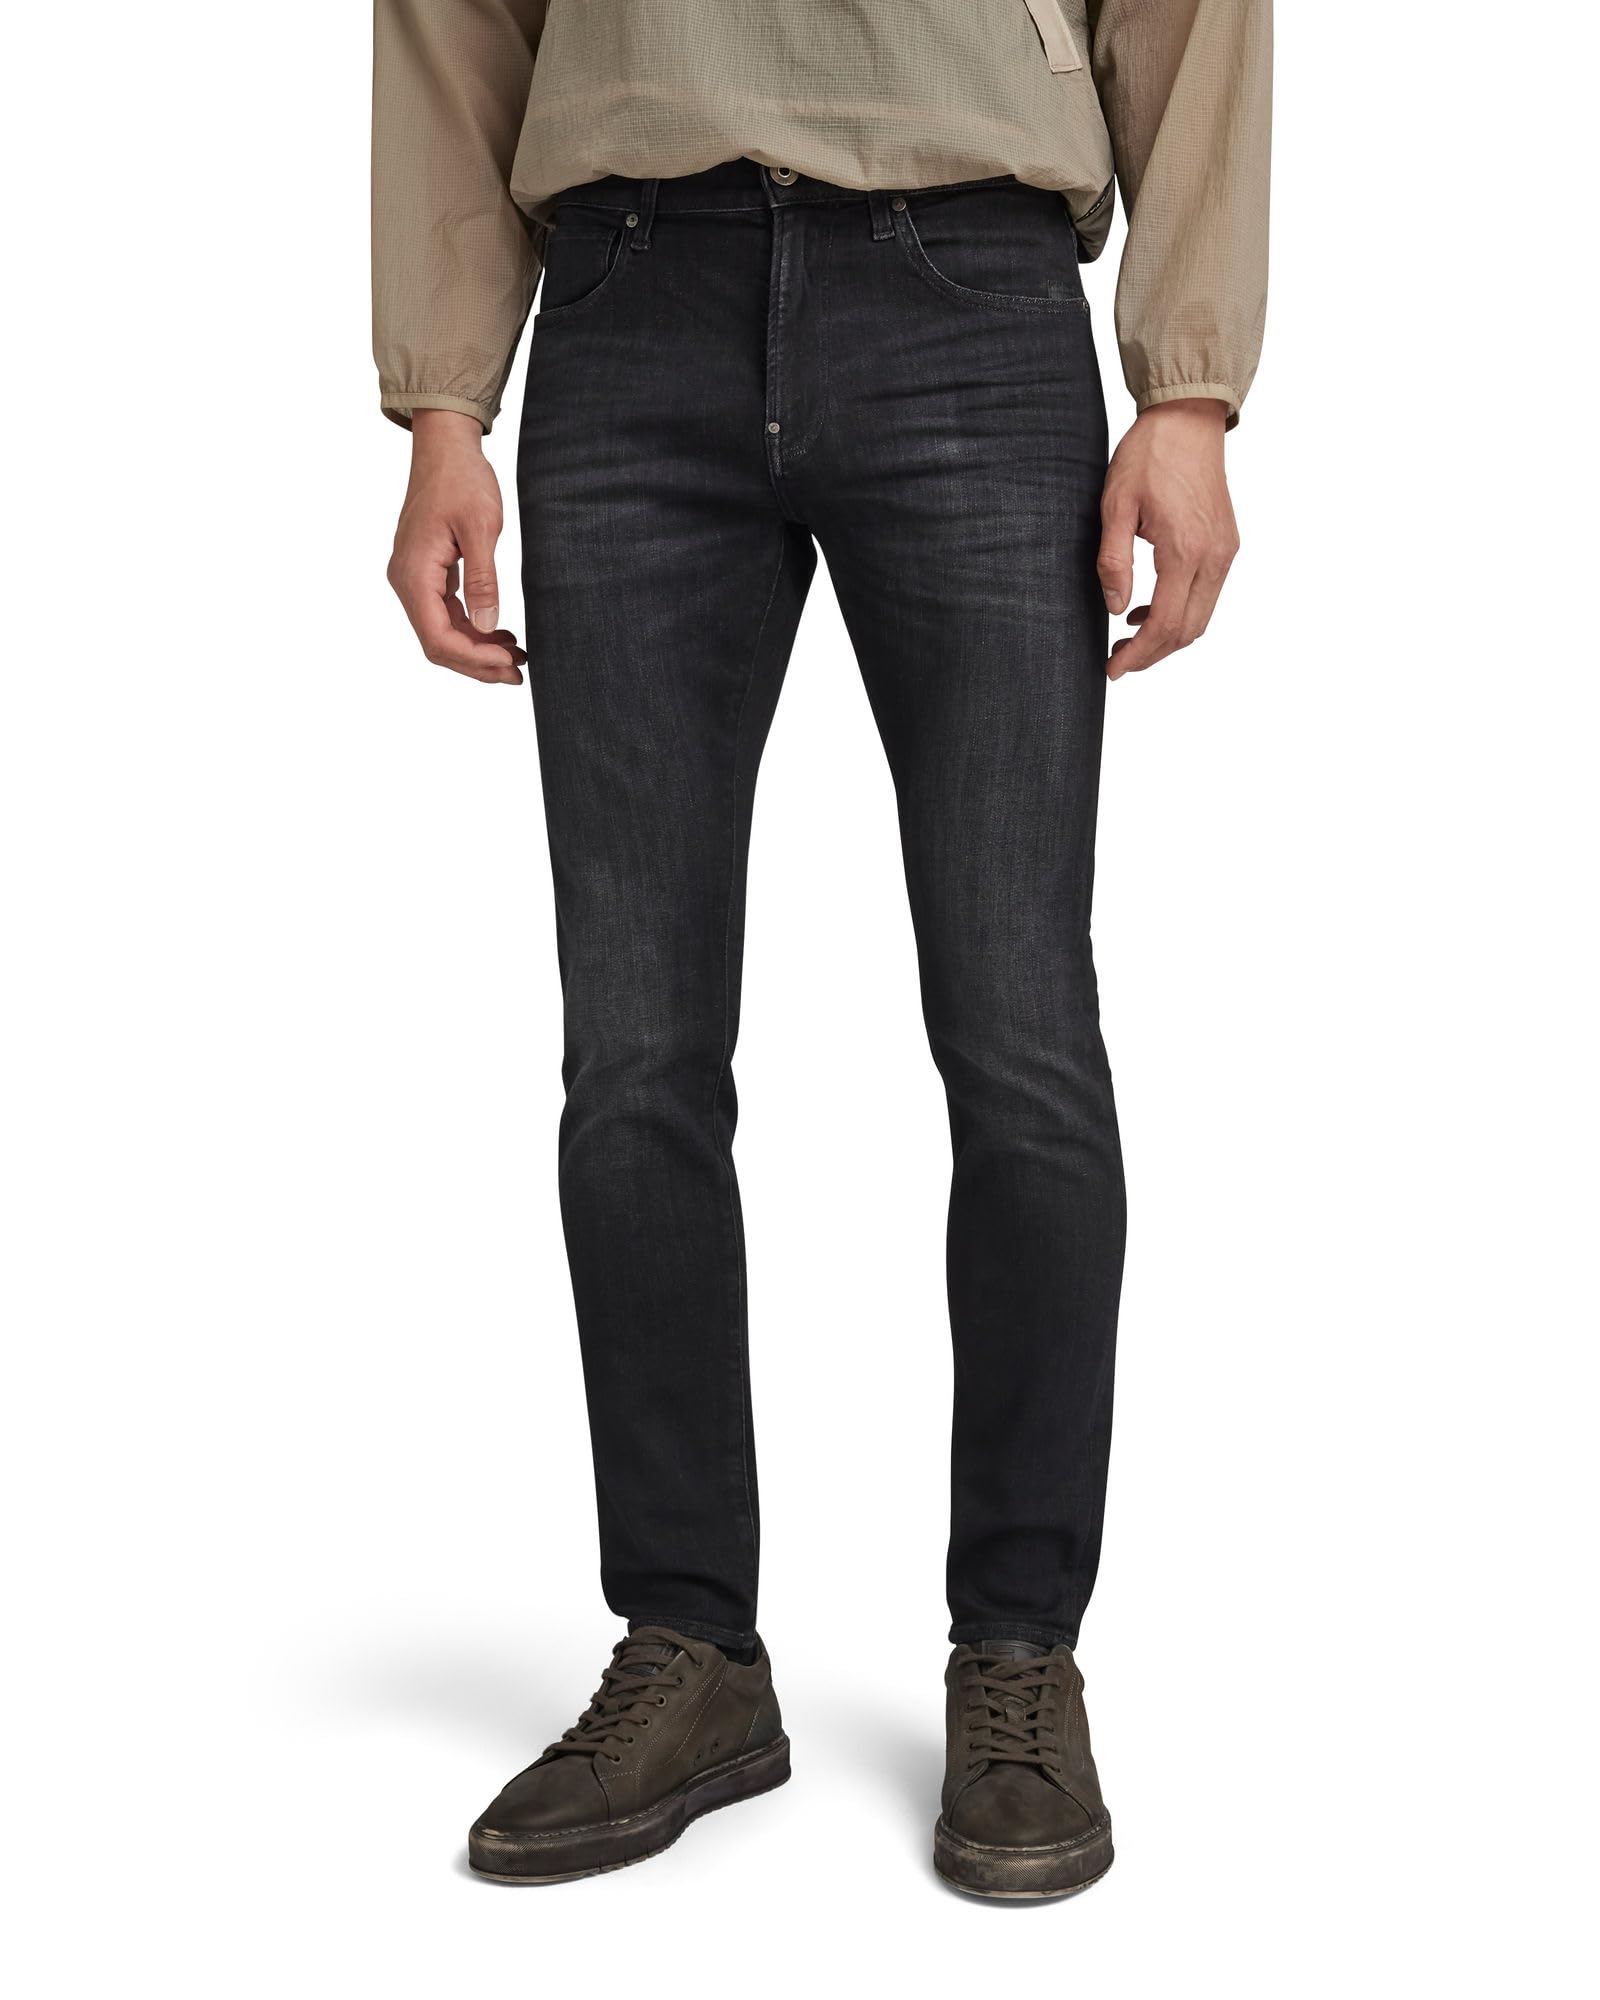 G-STAR RAW Herren Revend Skinny Jeans, Blau (medium aged faded 51010-A634-A592), 36W / 36L